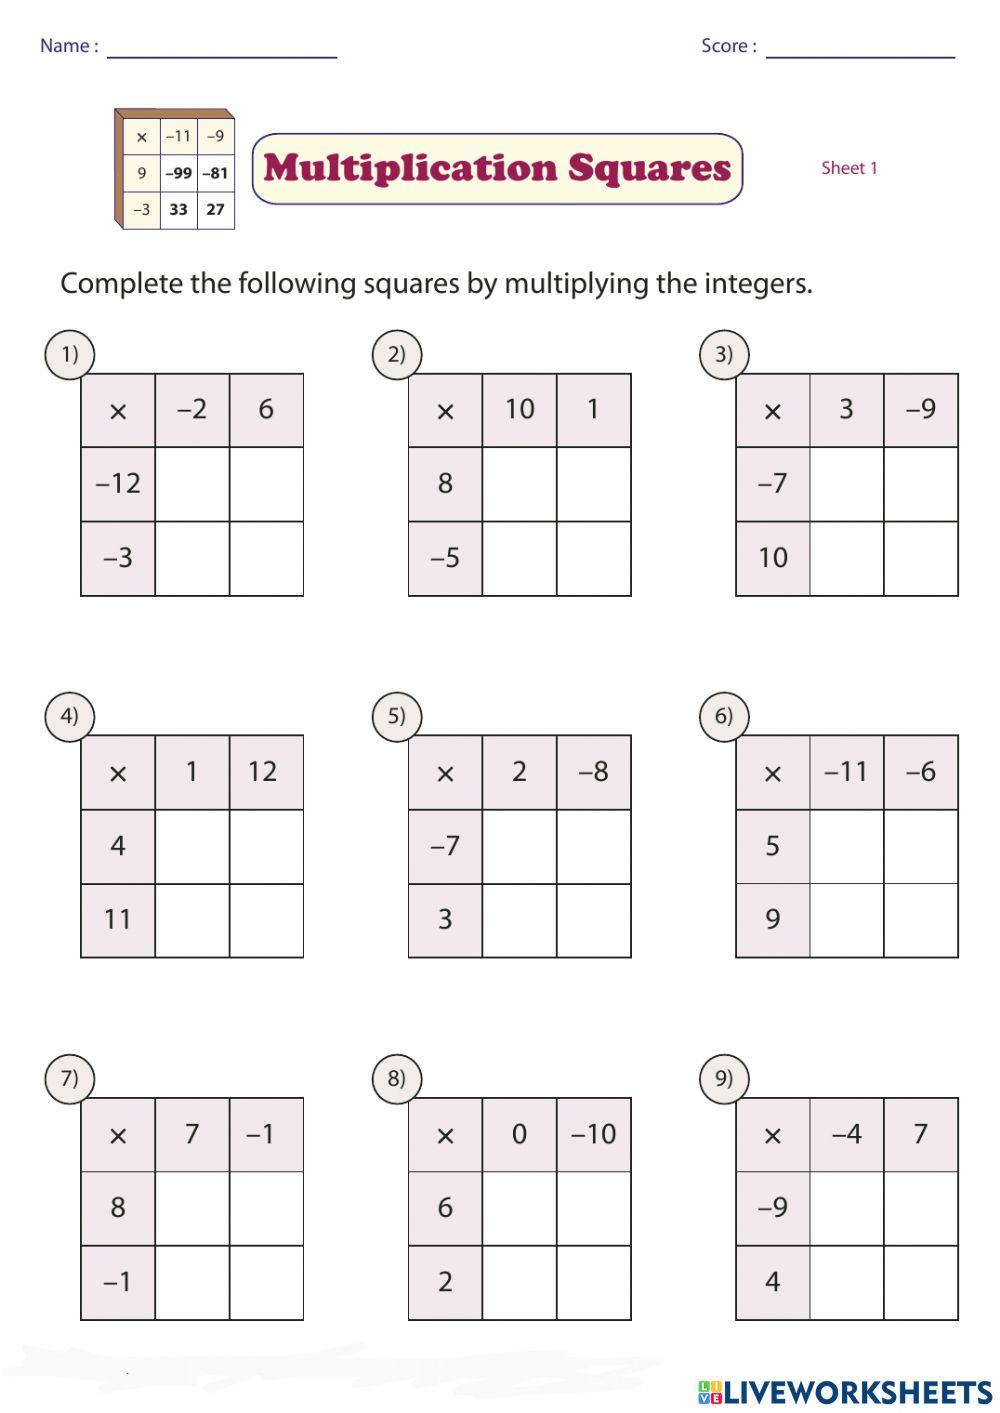 Multiplication Squares